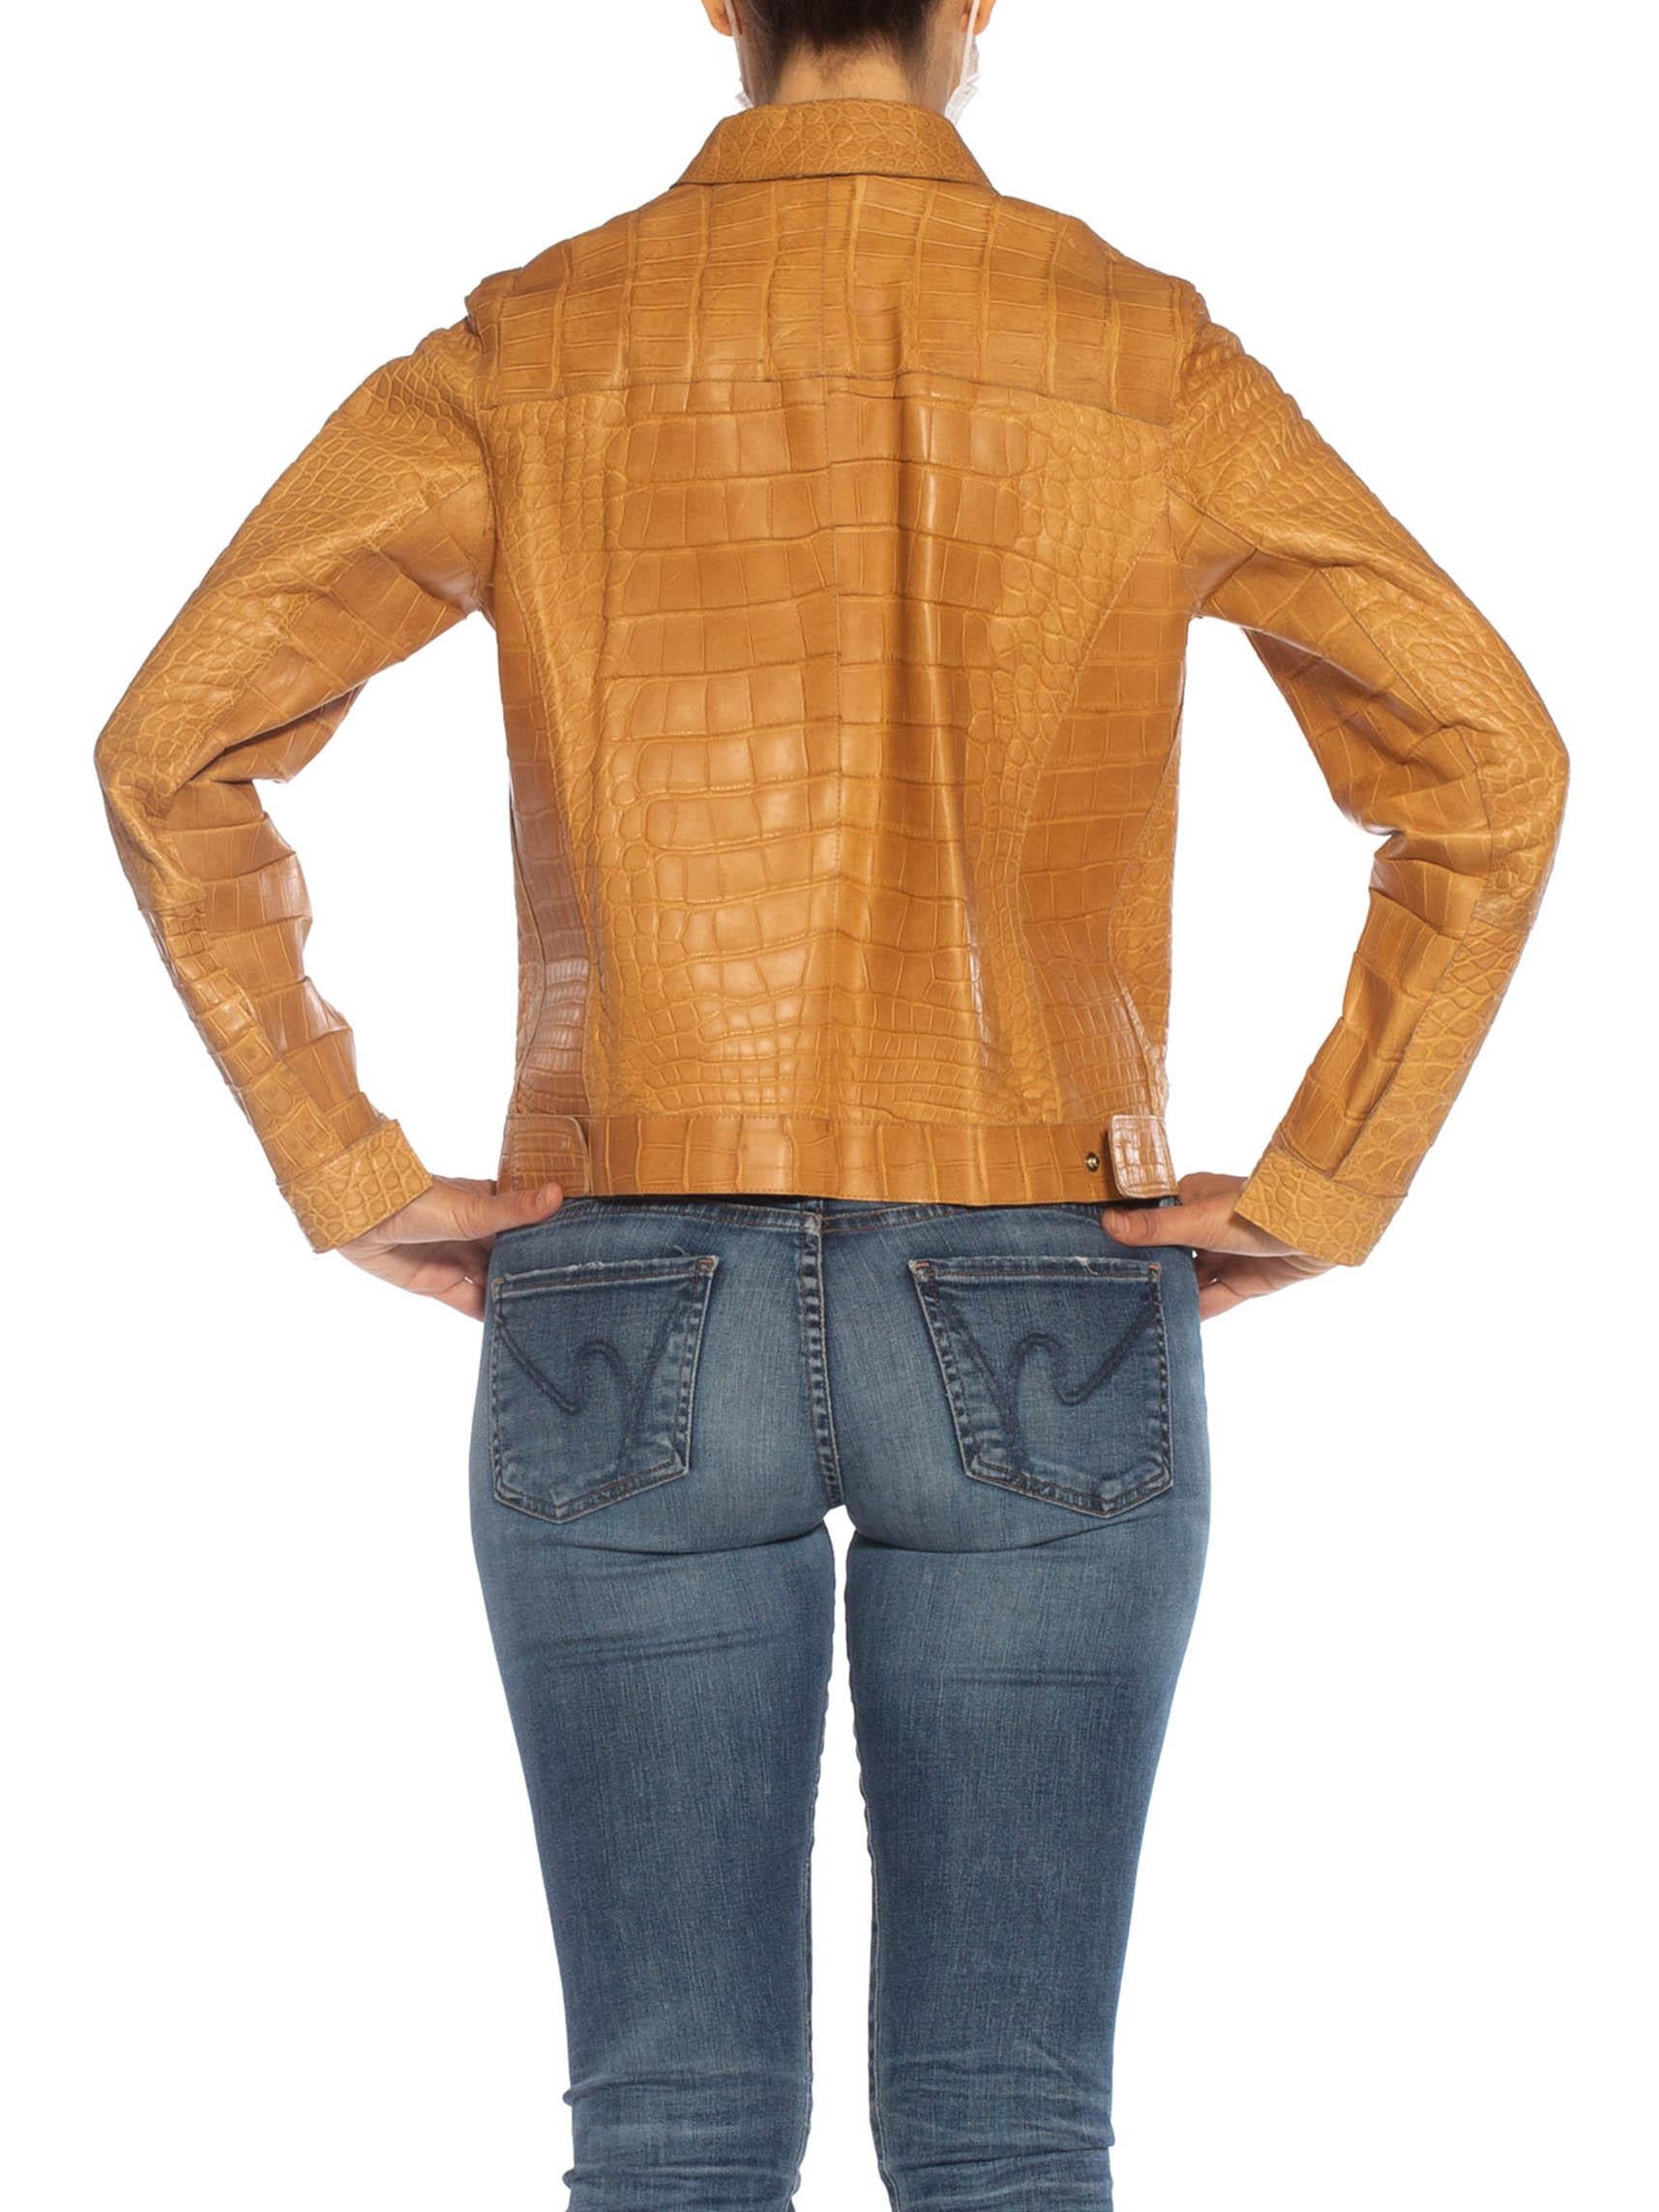 Women's 2000S PRADA Tan Alligator Leather Straight Jean Jacket Cut